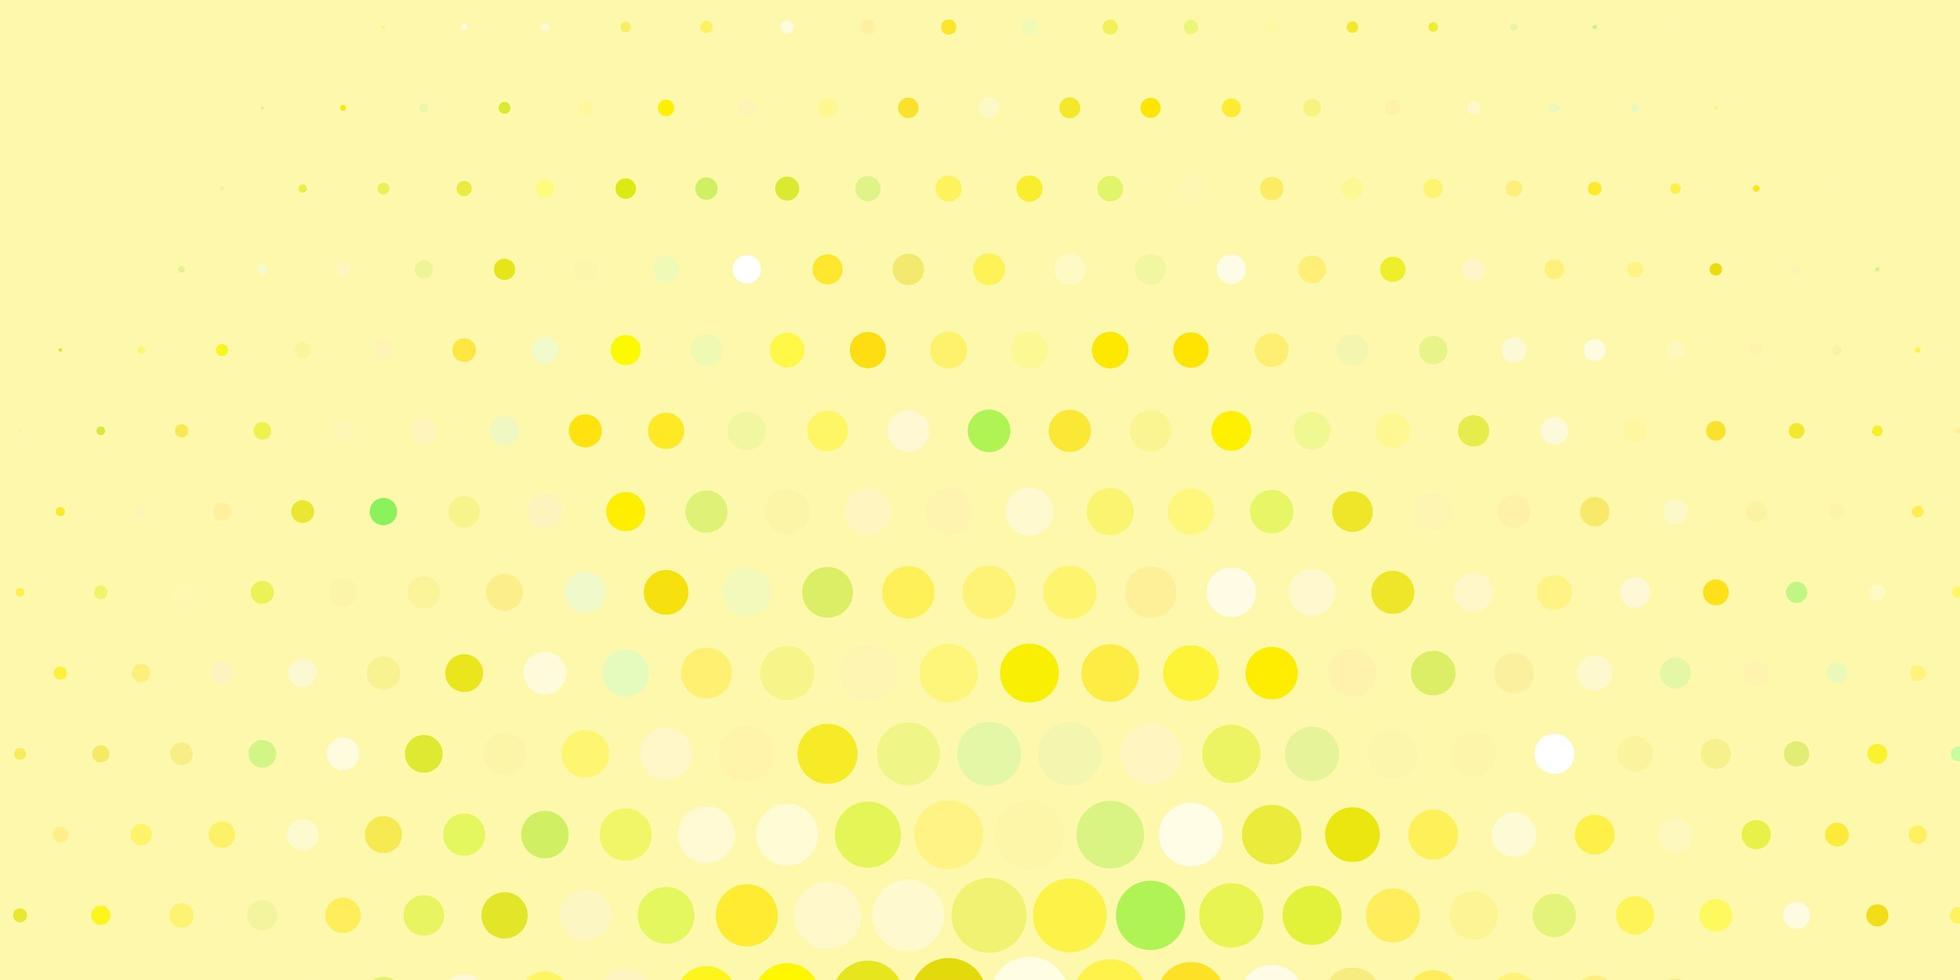 Fondo de vector amarillo verde claro con manchas diseño decorativo abstracto en estilo degradado con patrón de burbujas para folletos folletos